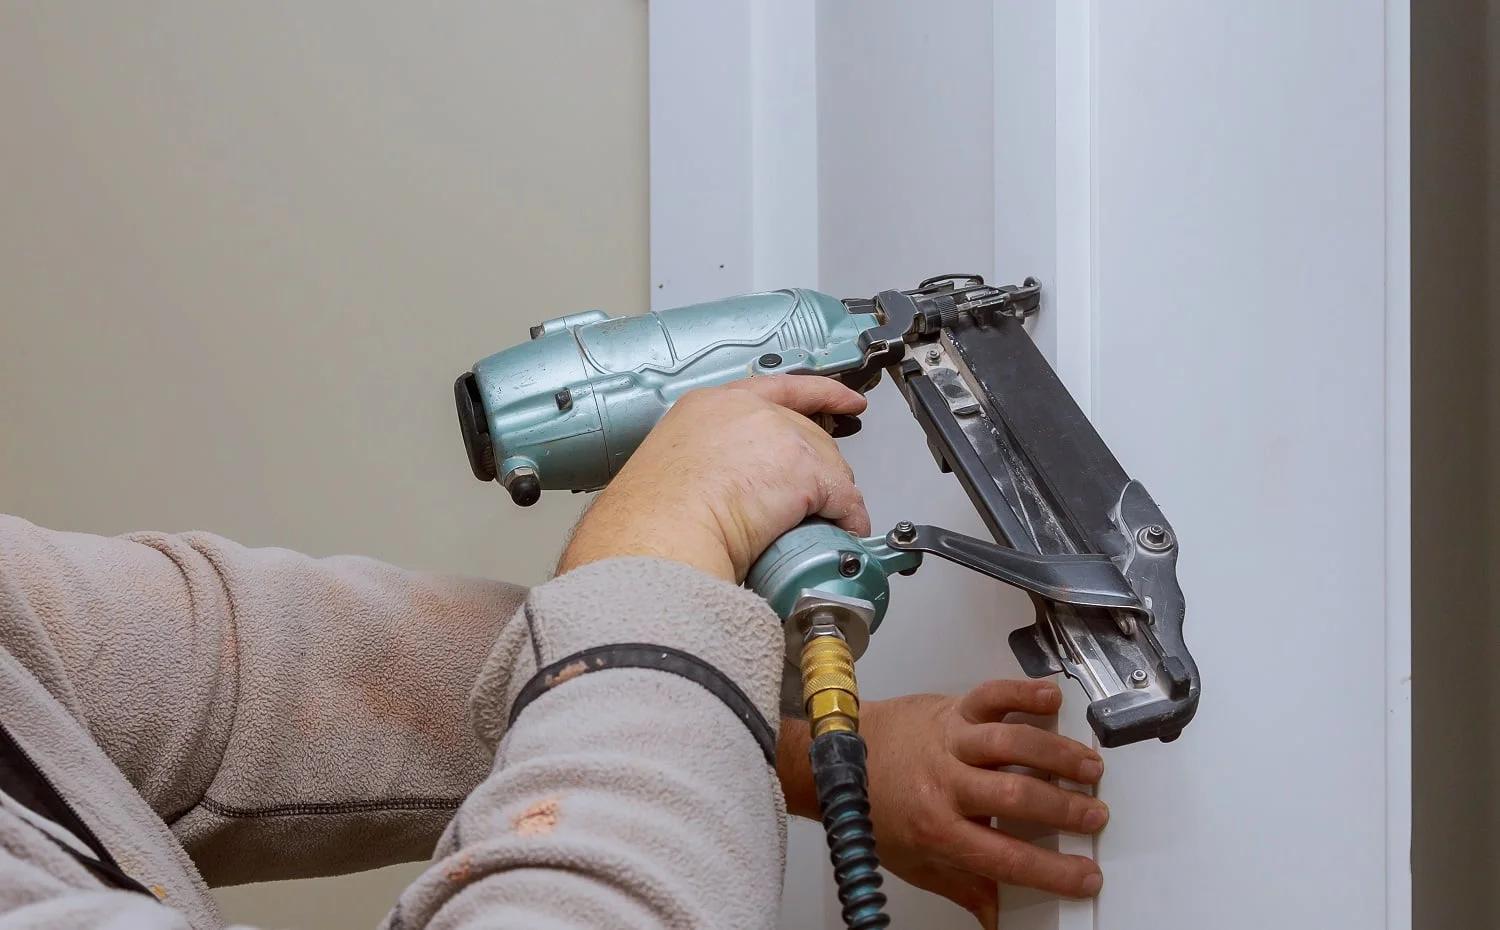 Construction handyman is working on renovation of apartment using air nail gun